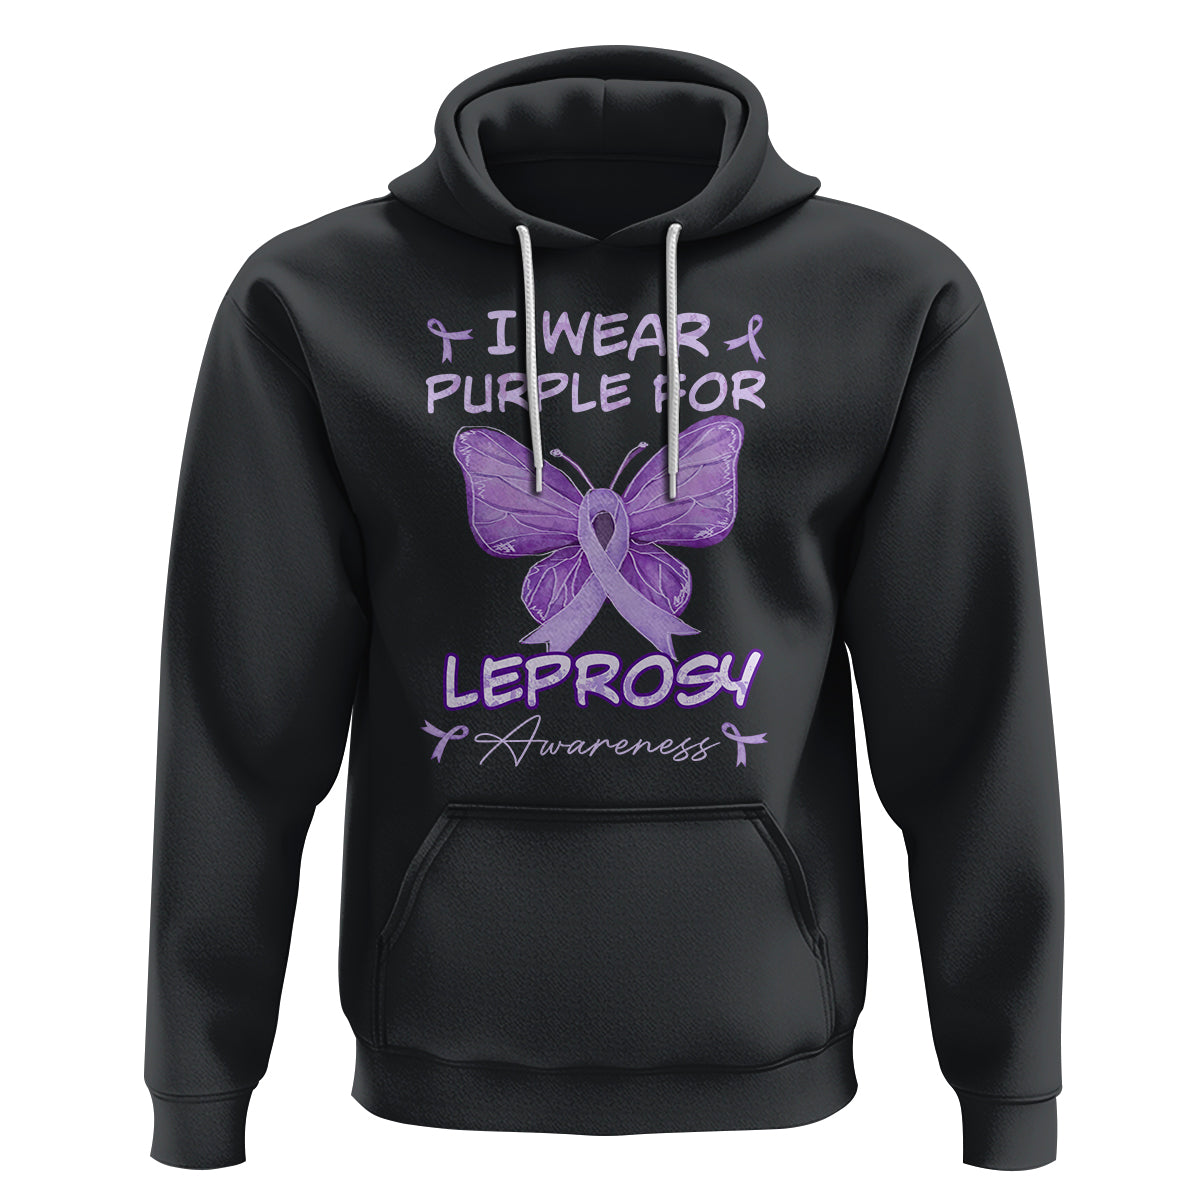 Leprosy Awareness Hoodie I Wear Purple For Leprosy Awareness TS02 Black Printyourwear